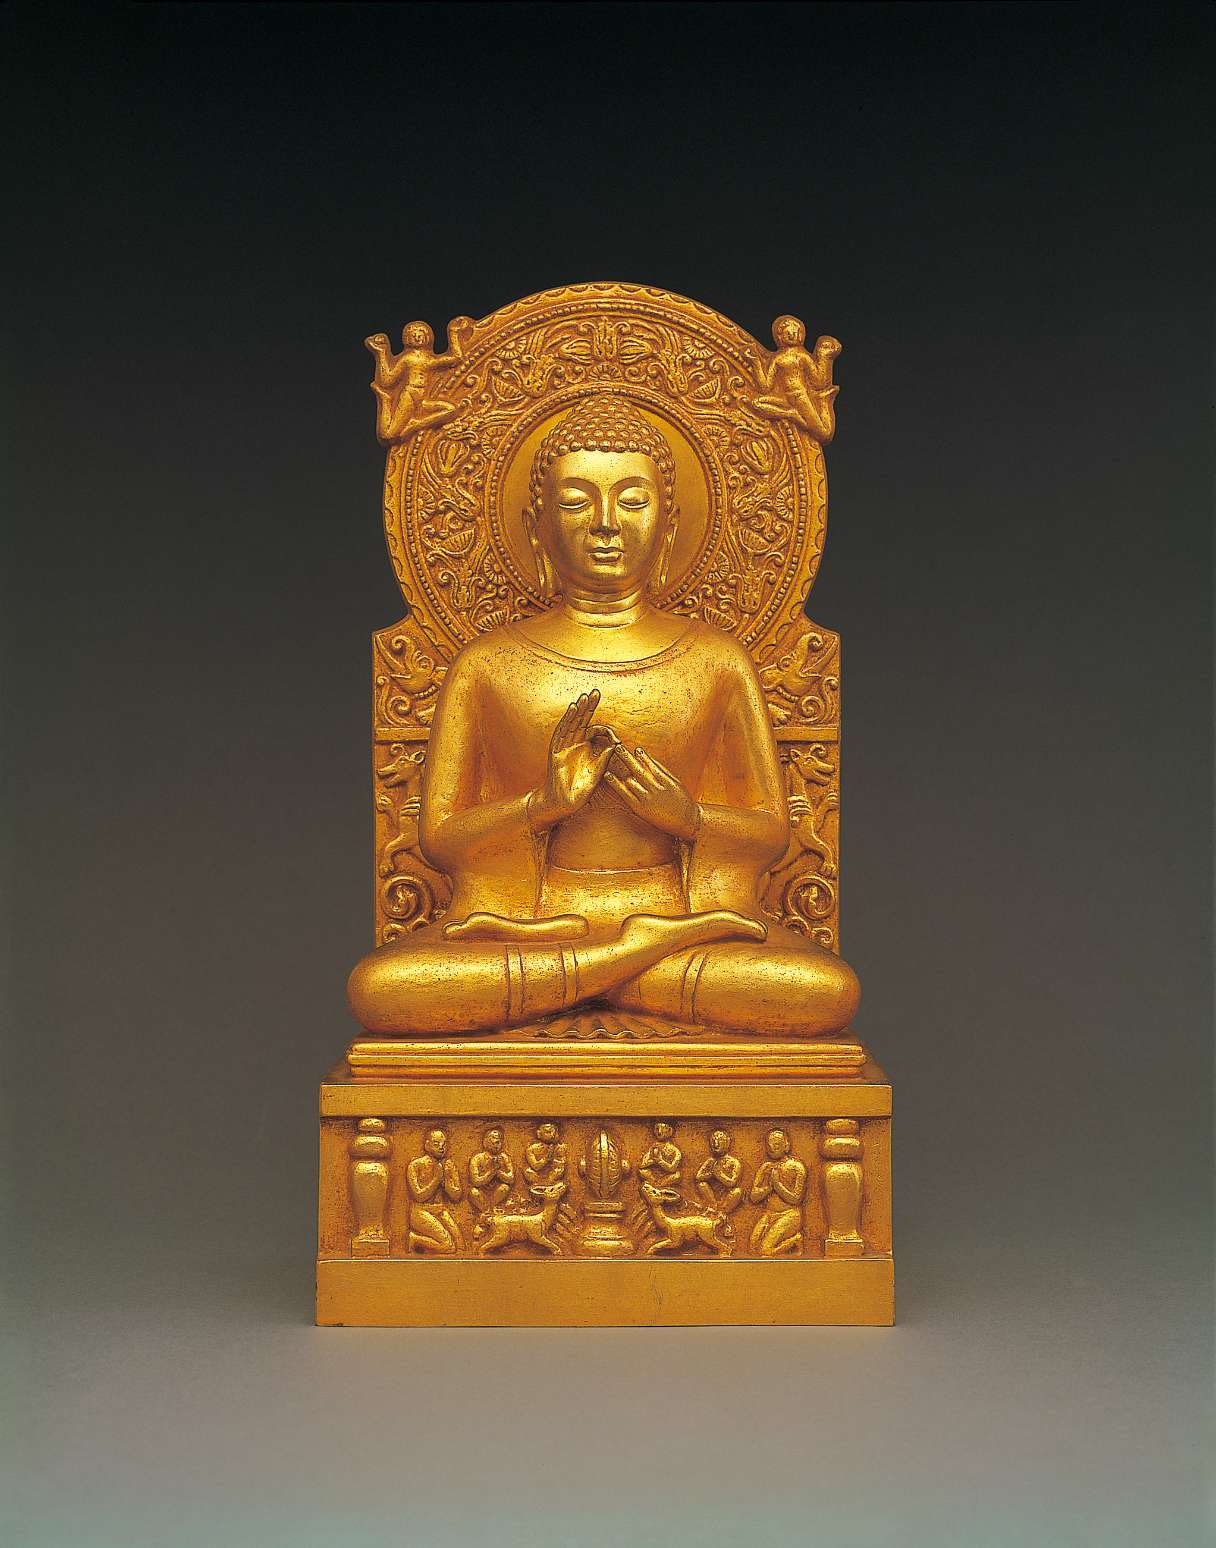 Buddhist Statuary